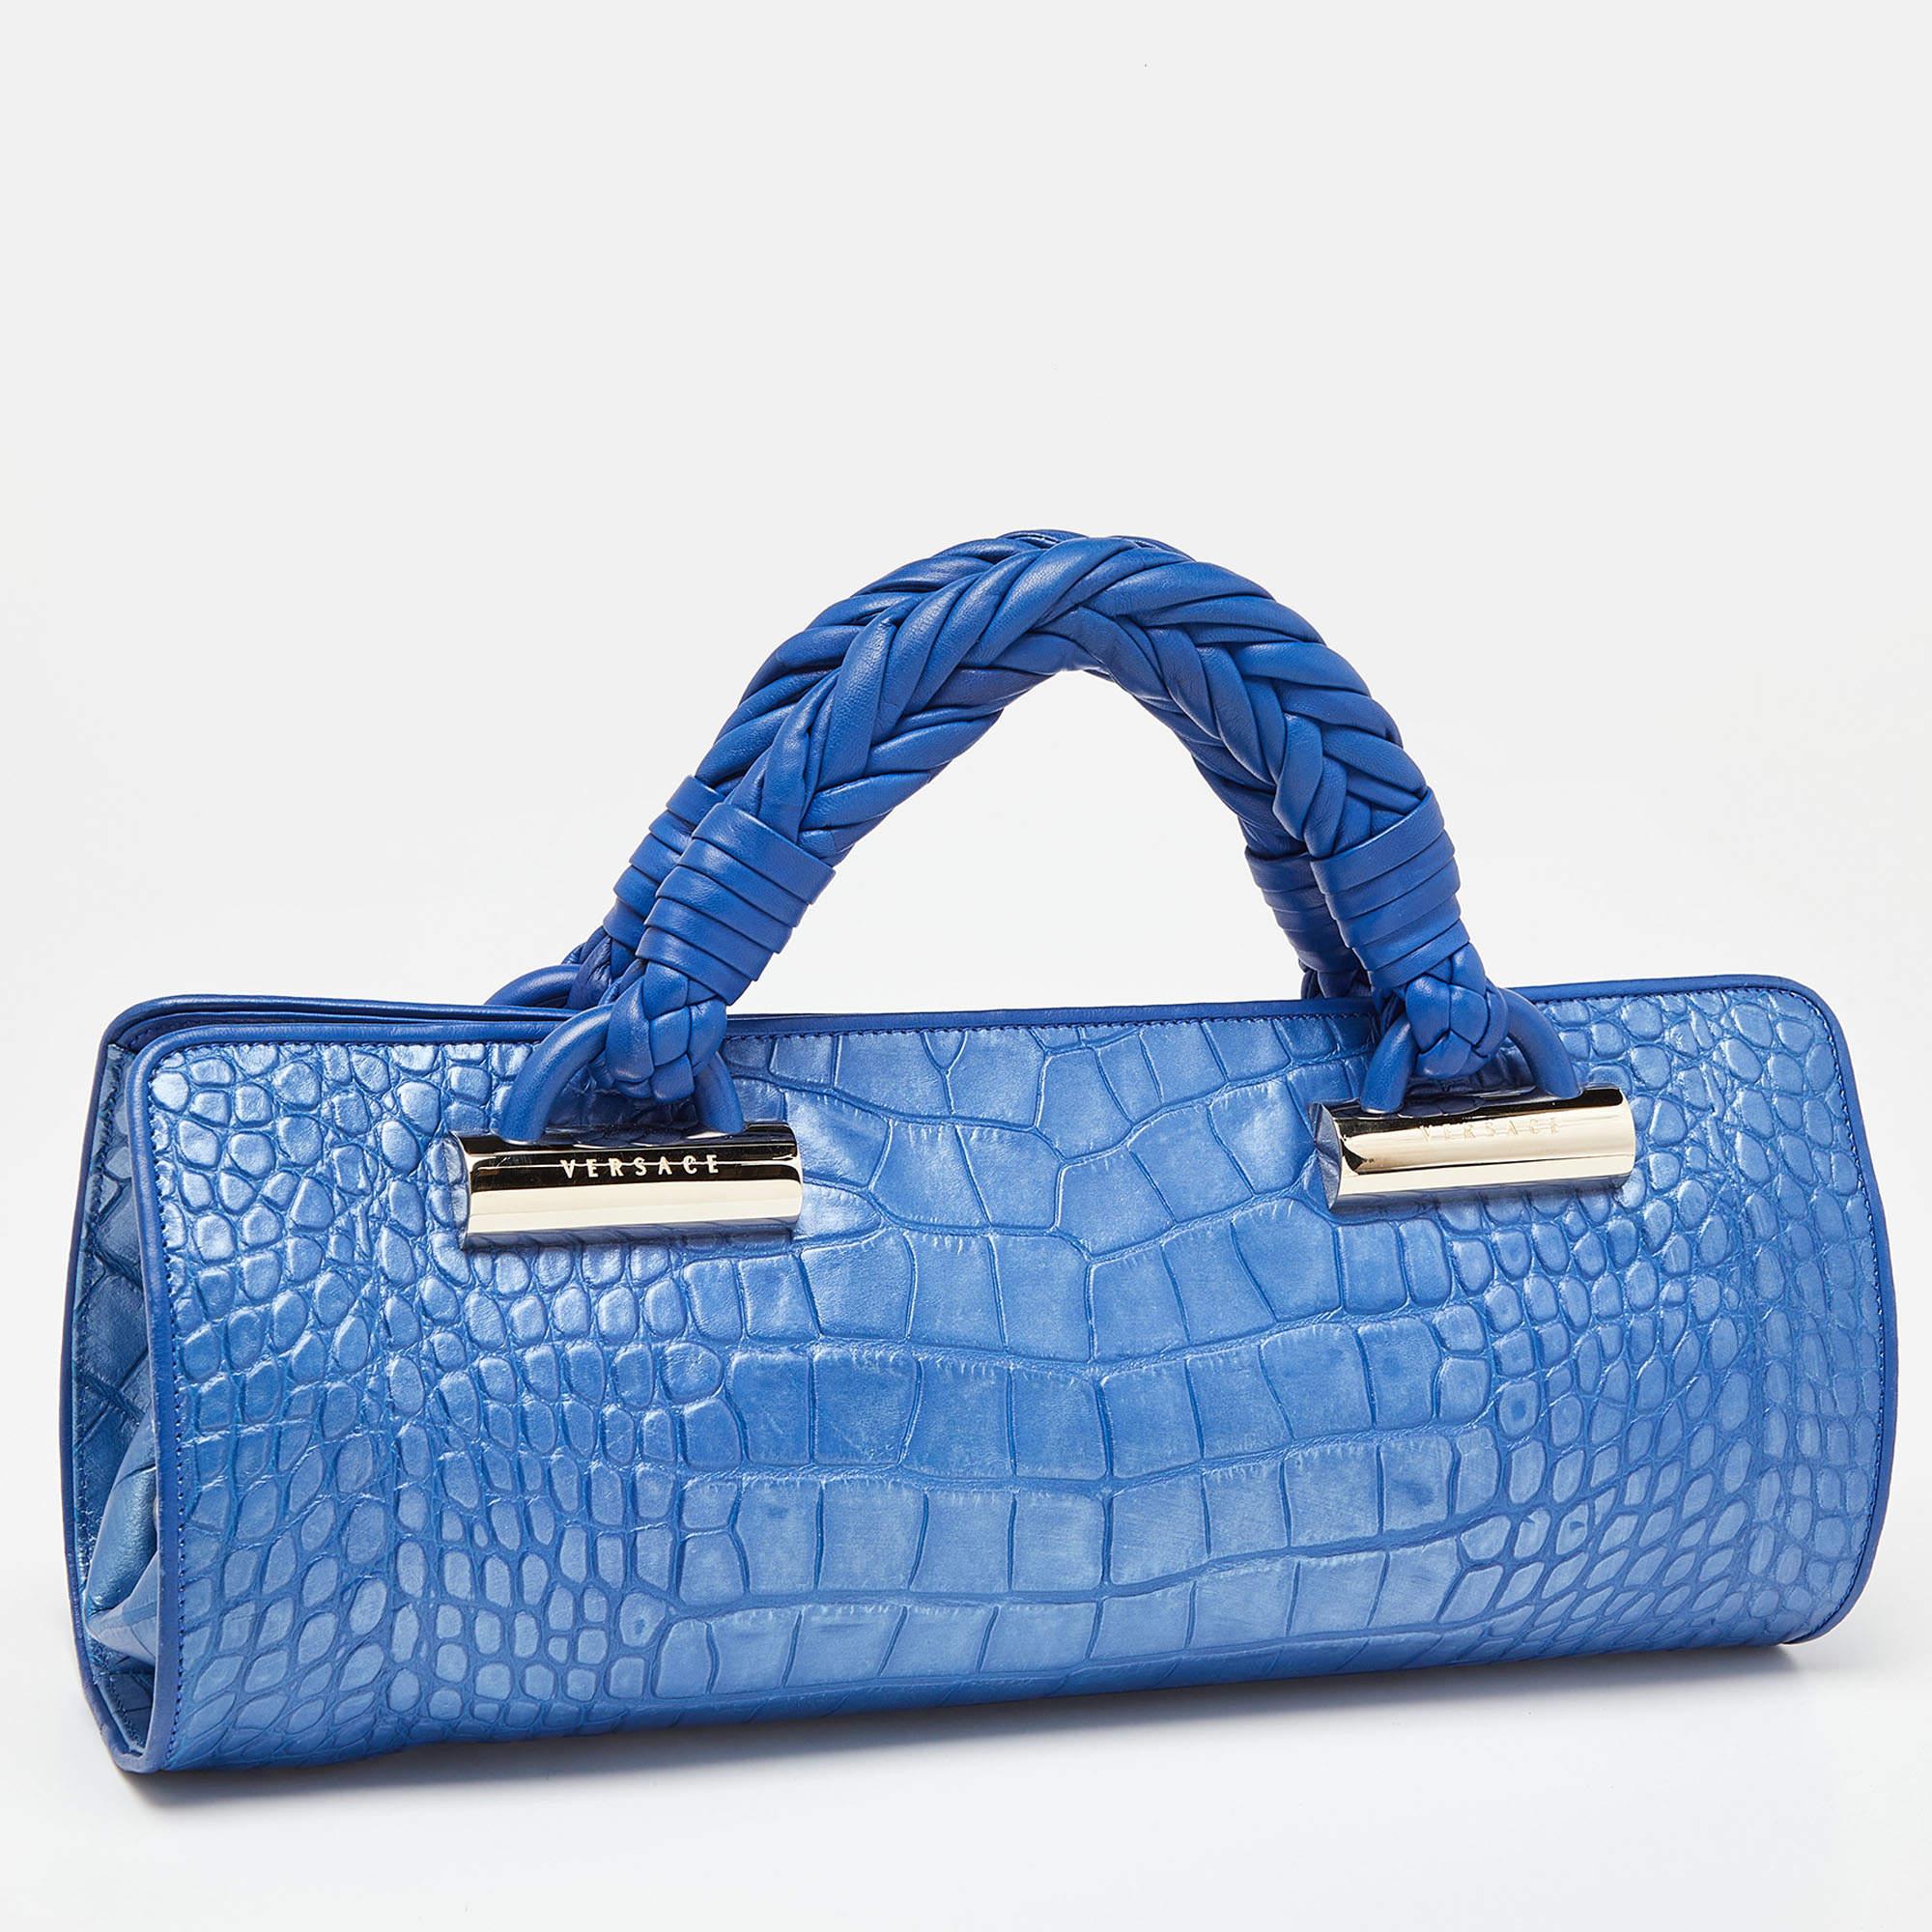 Women's Versace Metallic Blue Croc Embossed Leather Frame Satchel